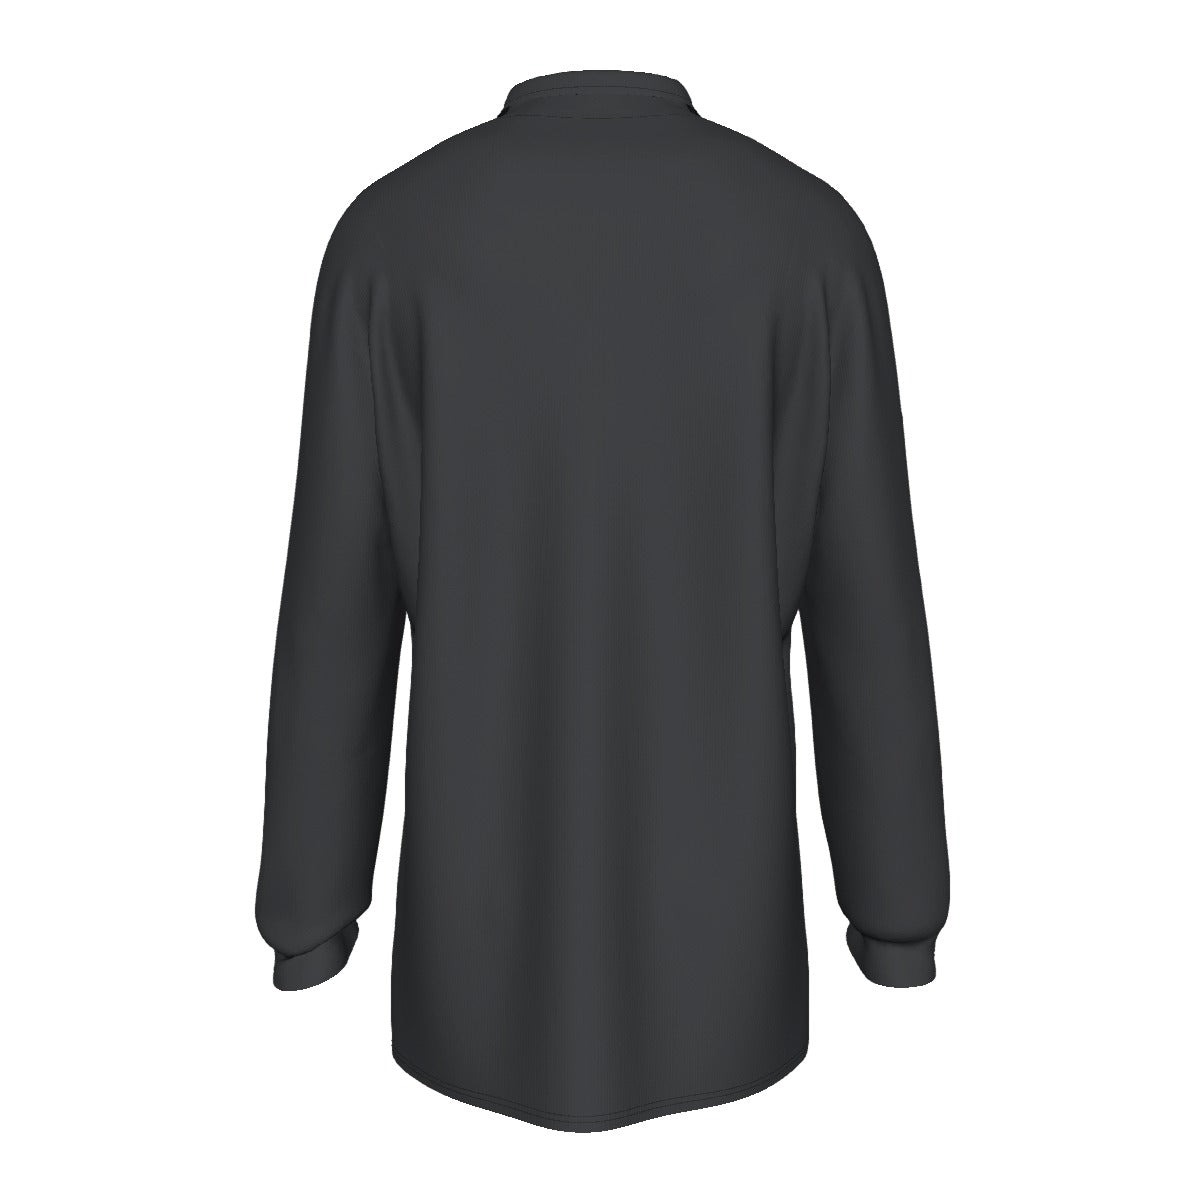 All-Over Print Men's Long Sleeve Polo Shirt